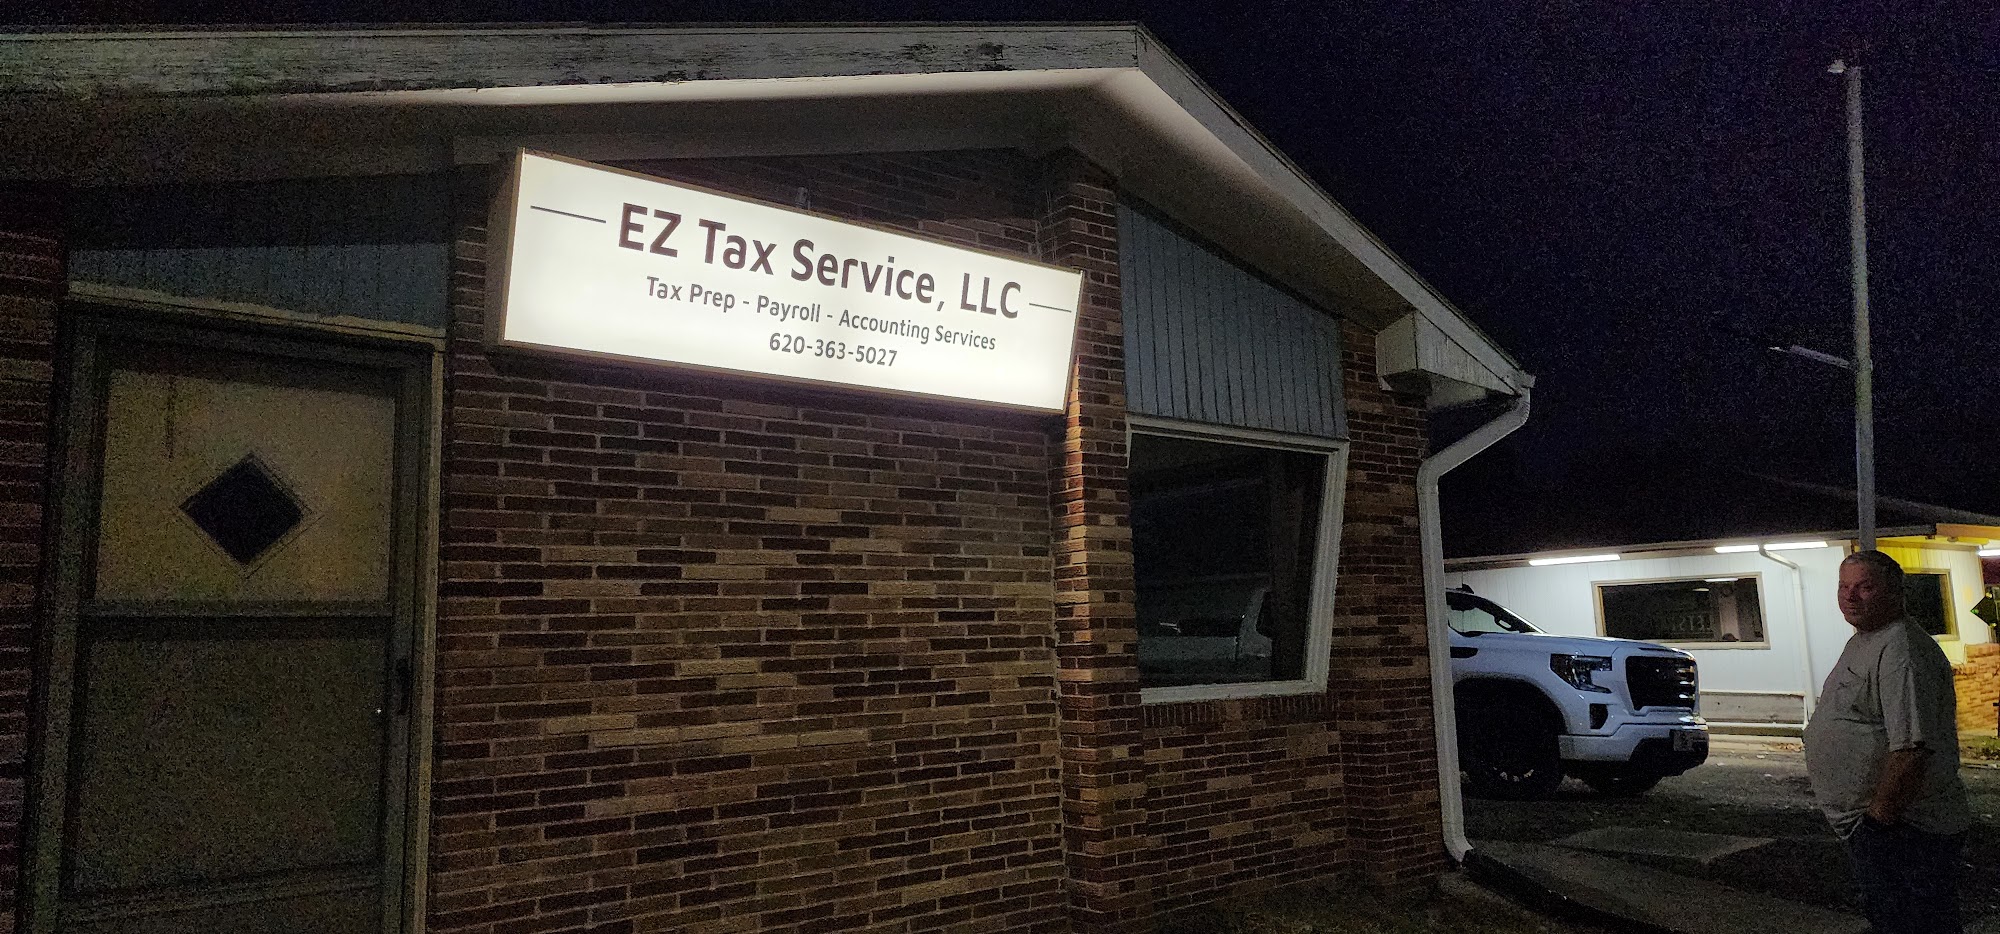 EZ Tax Service LLC 315 S State St, Iola Kansas 66749